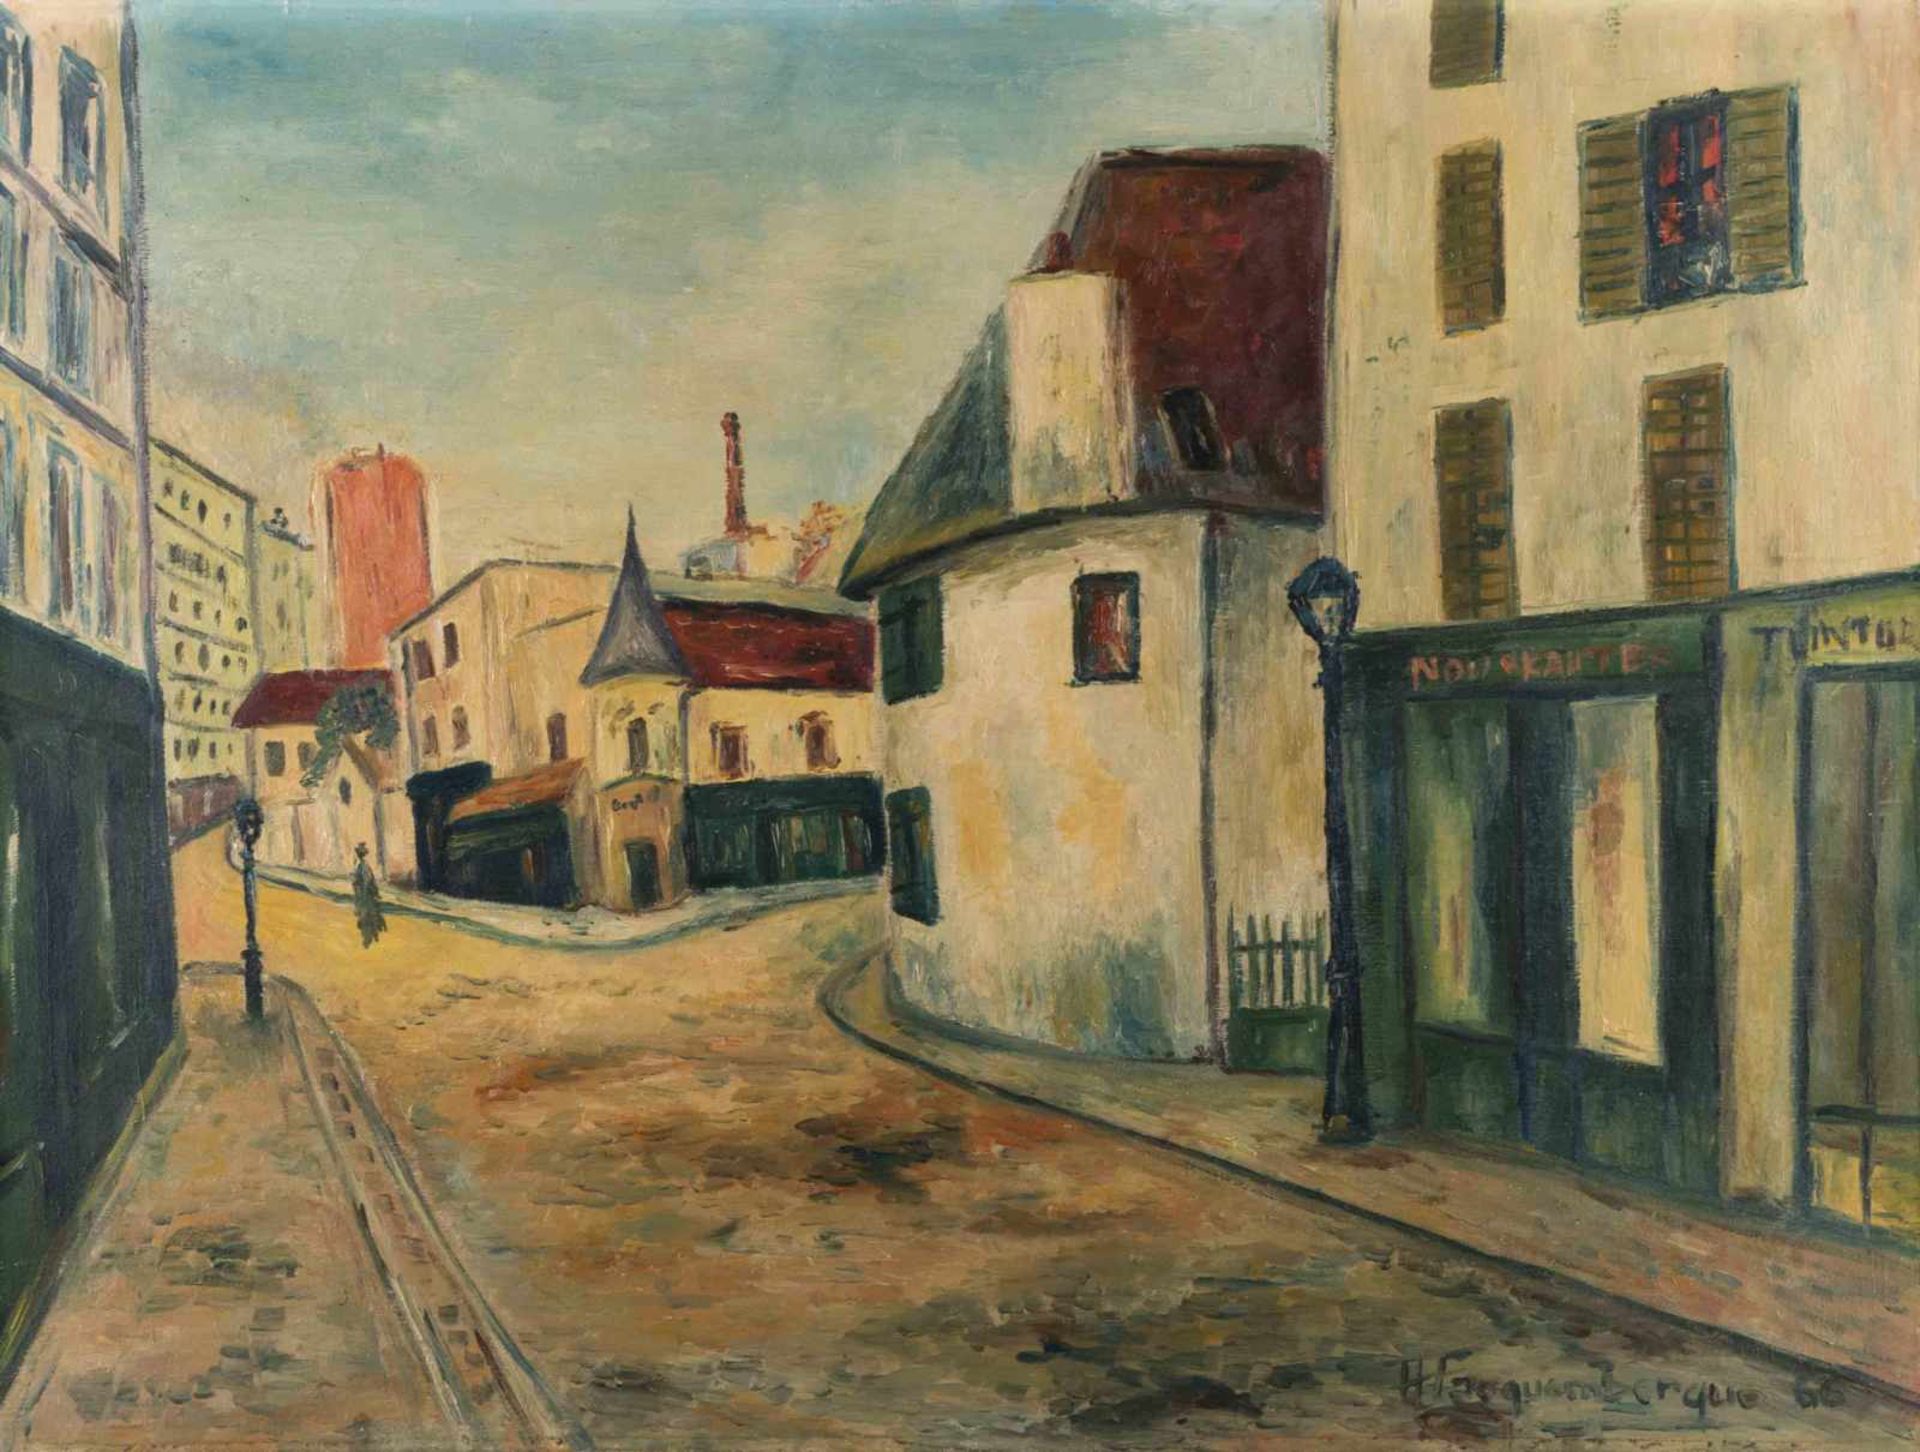 H. Fauquembergue (XX) "Straßenszene" Gemälde Öl/Leinwand, 46 cm x 60 cm, rechts unten signiert und